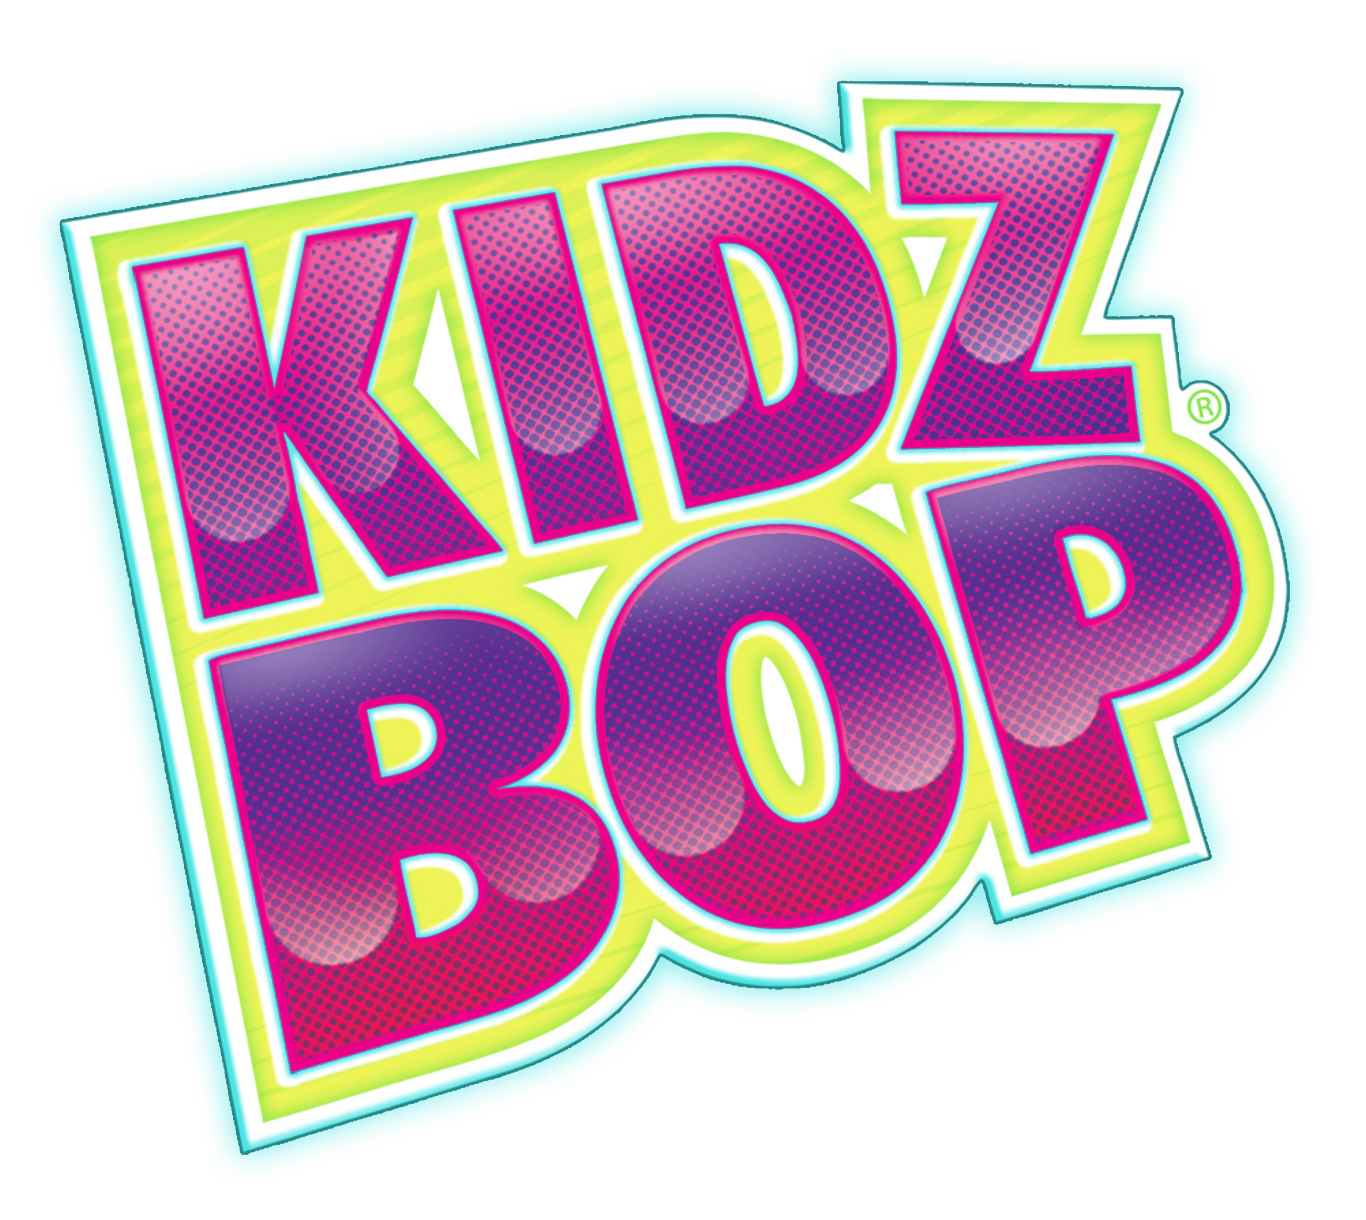 Kidz Bop Logo Bop Kids Photo